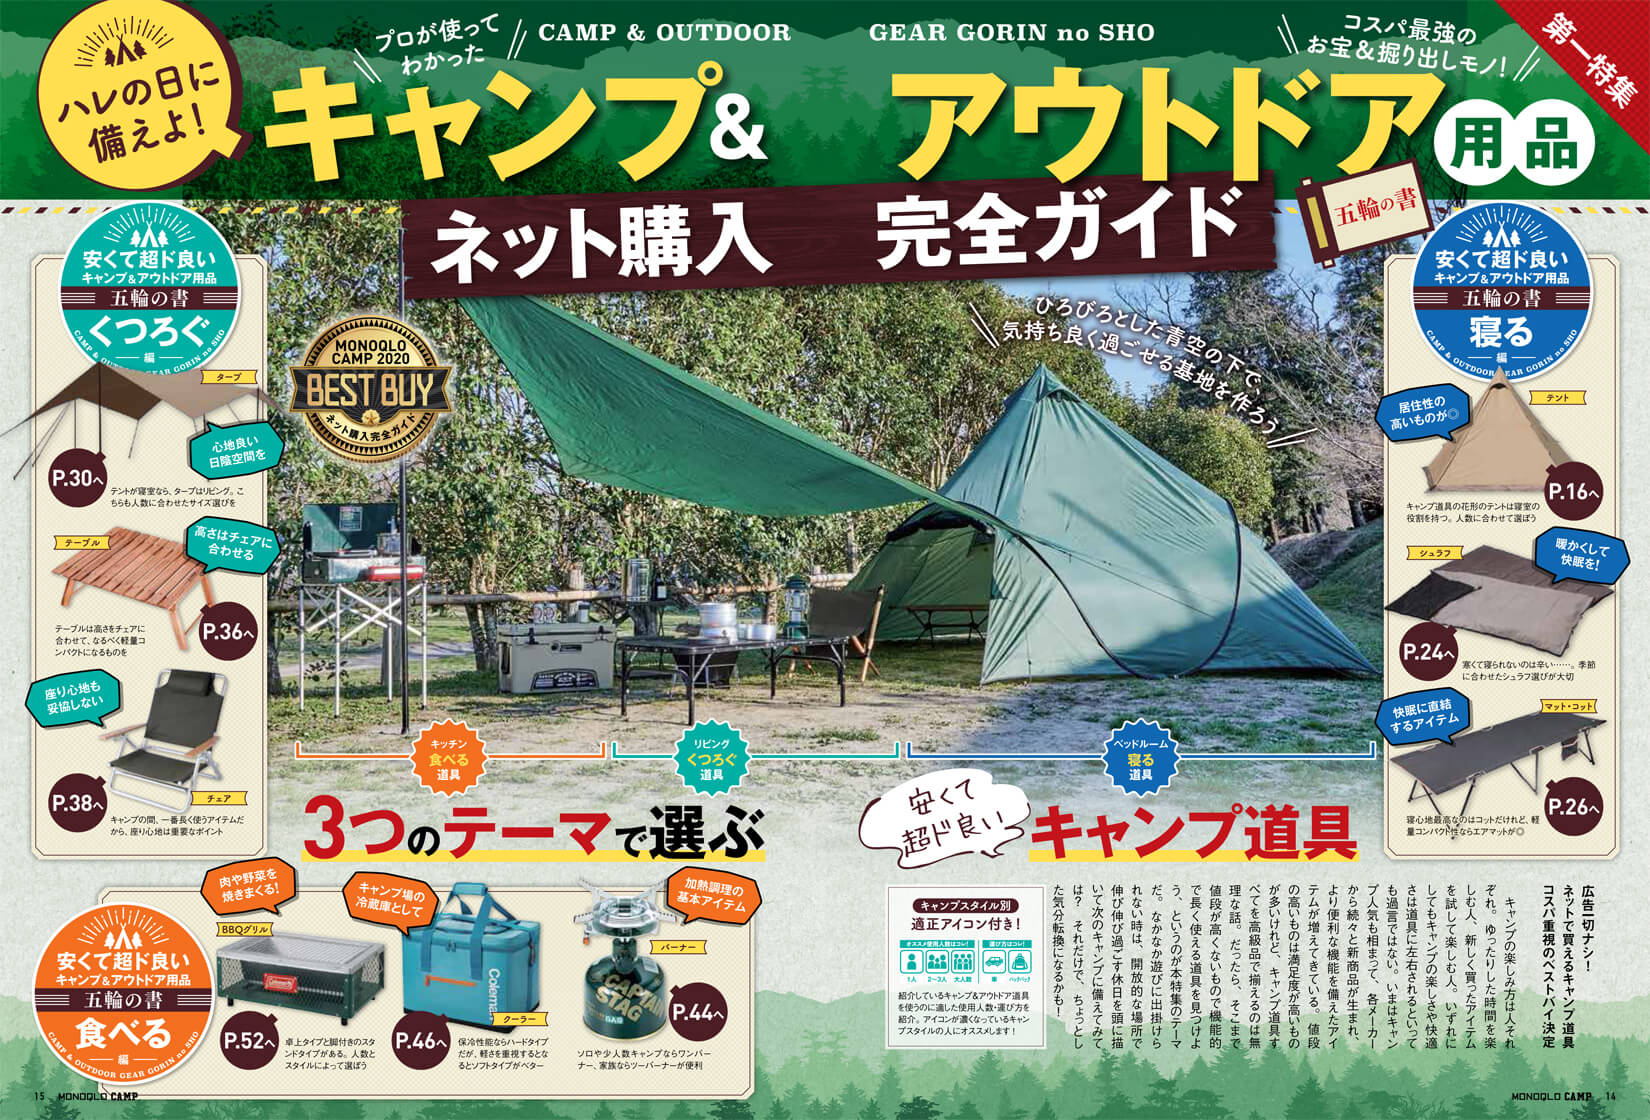 Monoqlo Camp 晋遊舎online